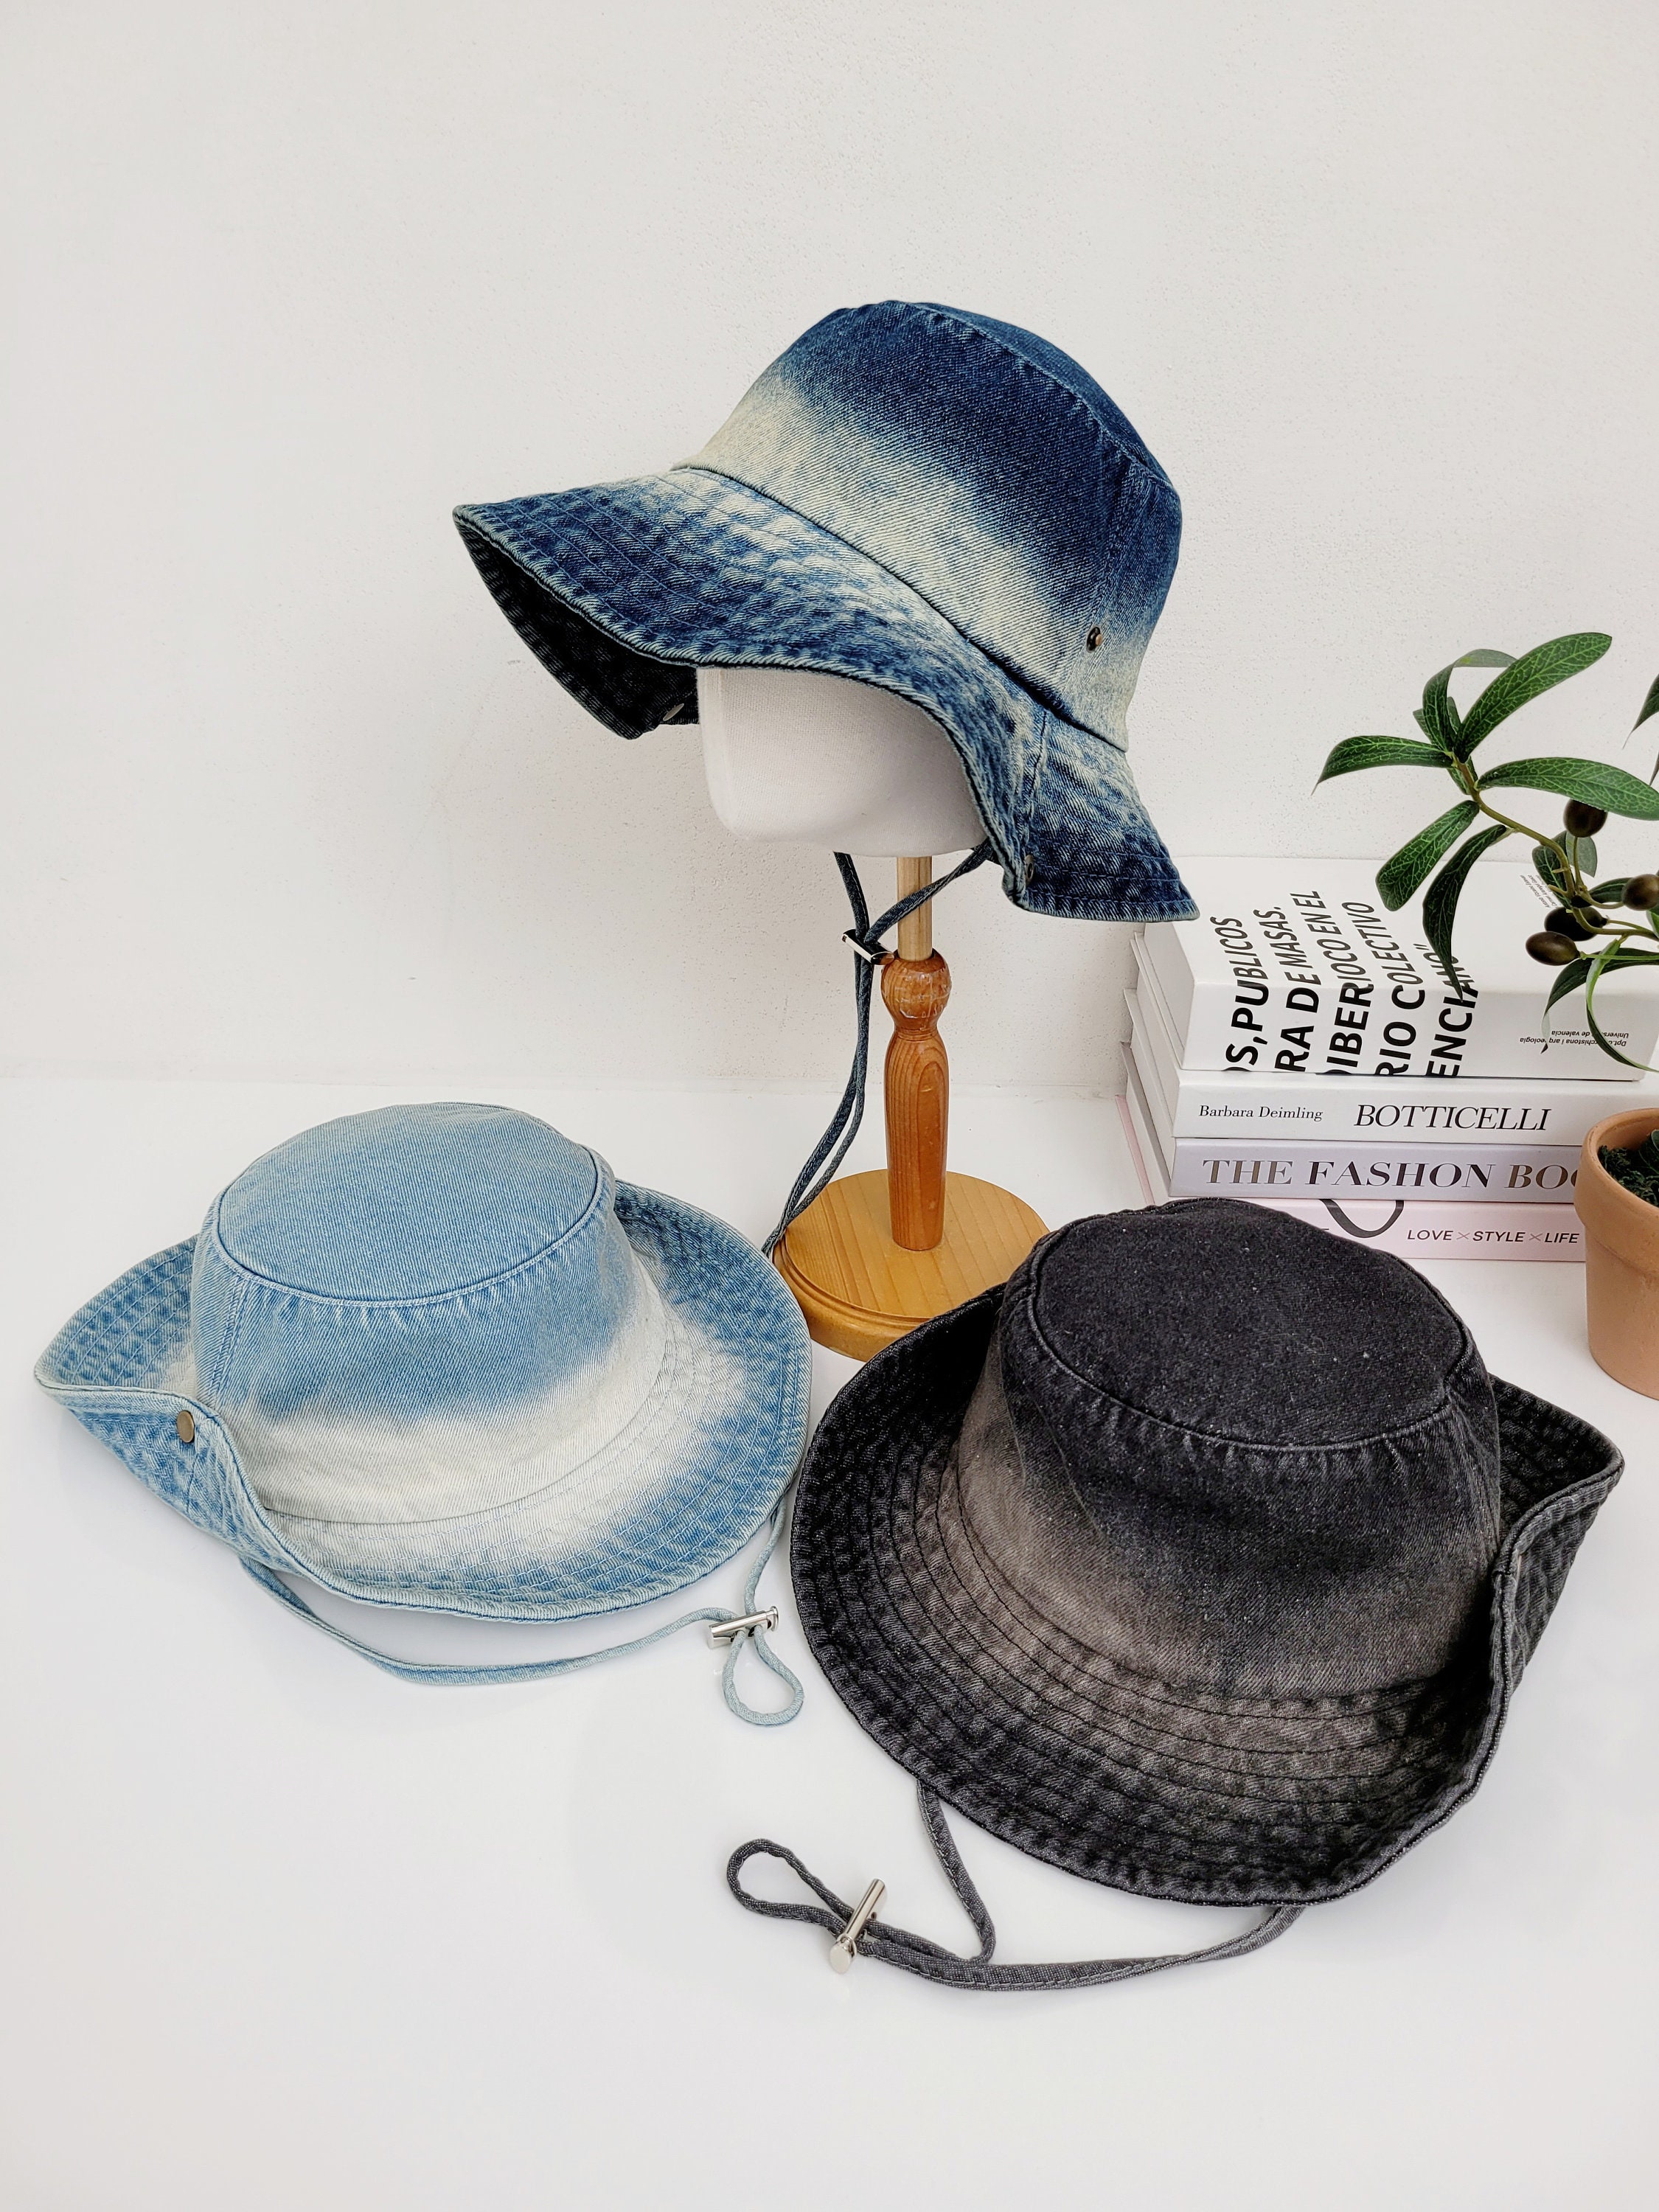 Fashion Summer Bucket Hat Sun Hats for Men Outdoor Fishing Travel